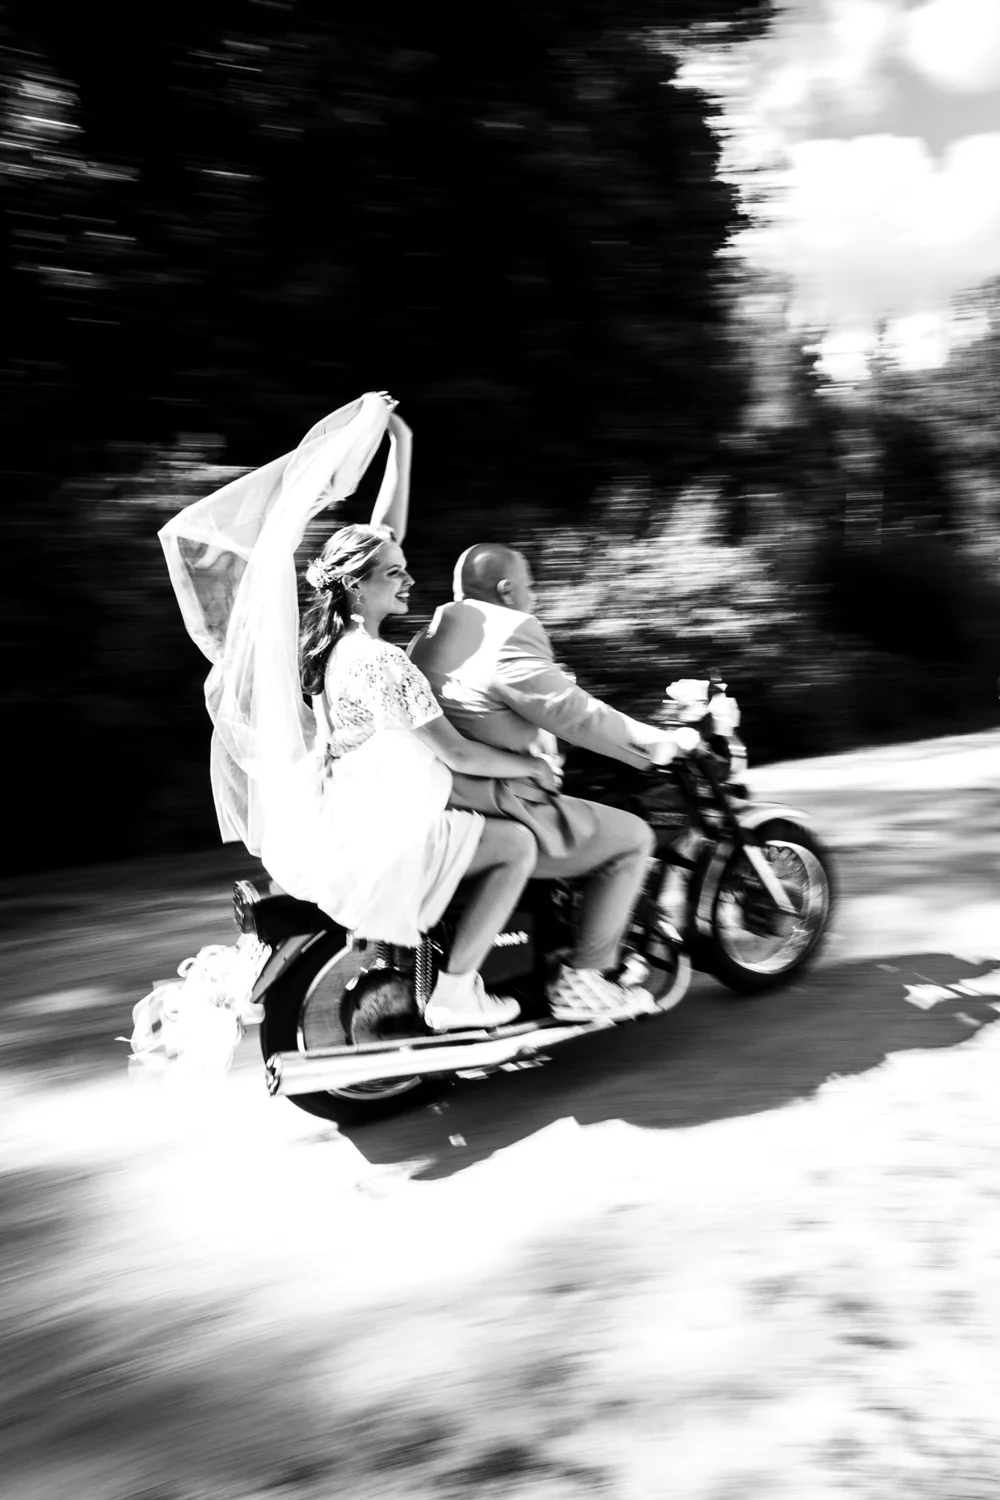 Motociklas vestuves